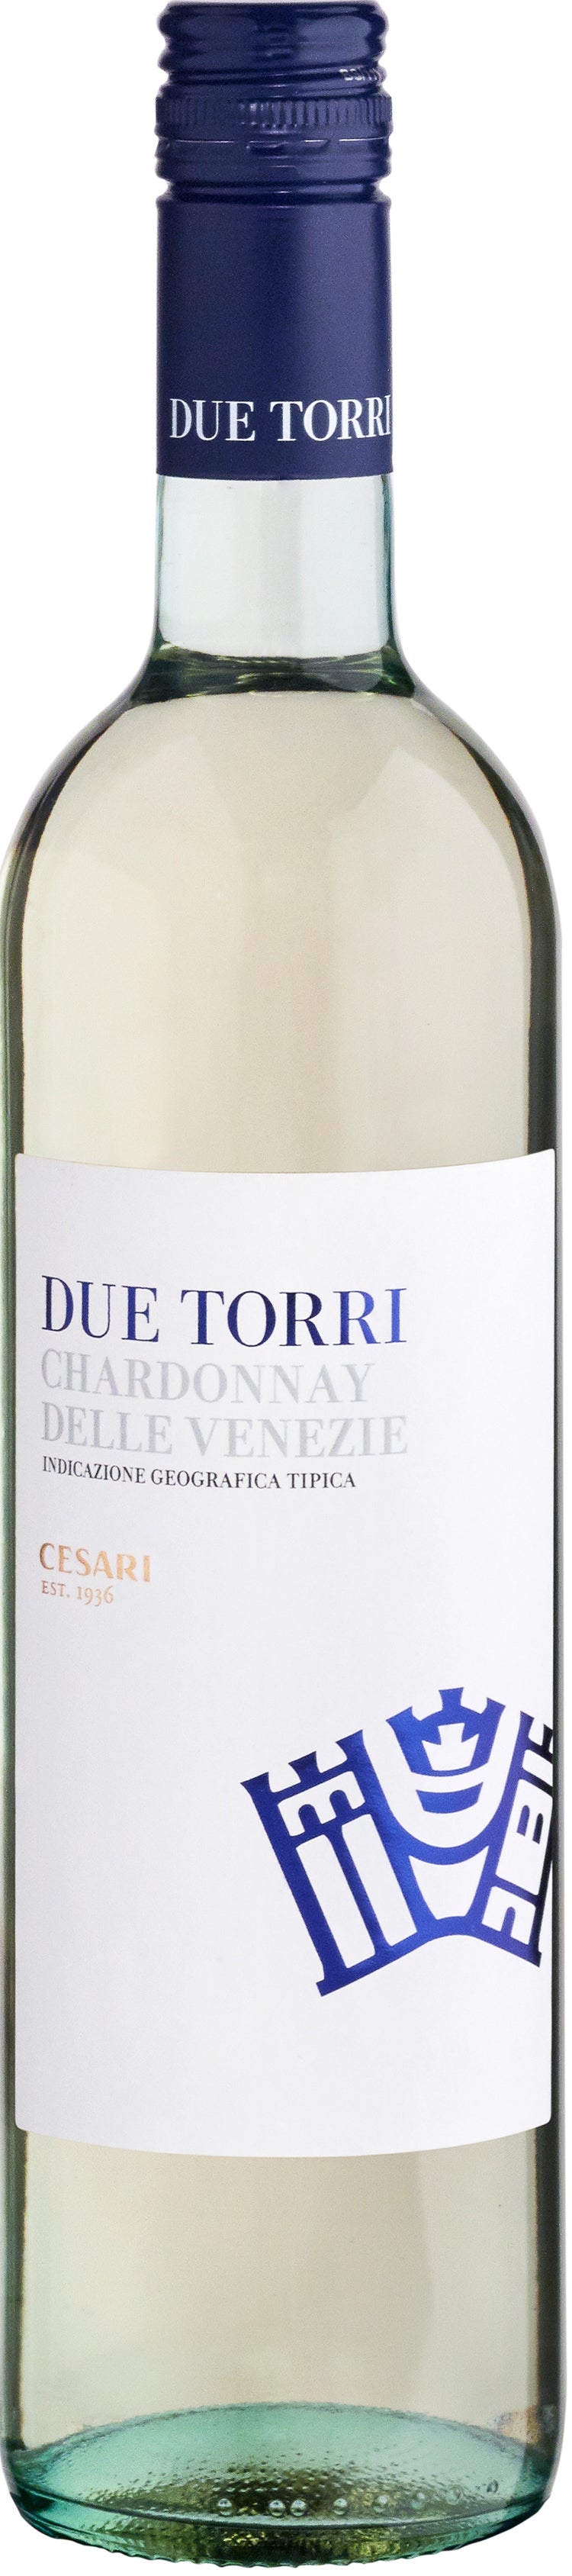 Duetorri Chardonnay 2016